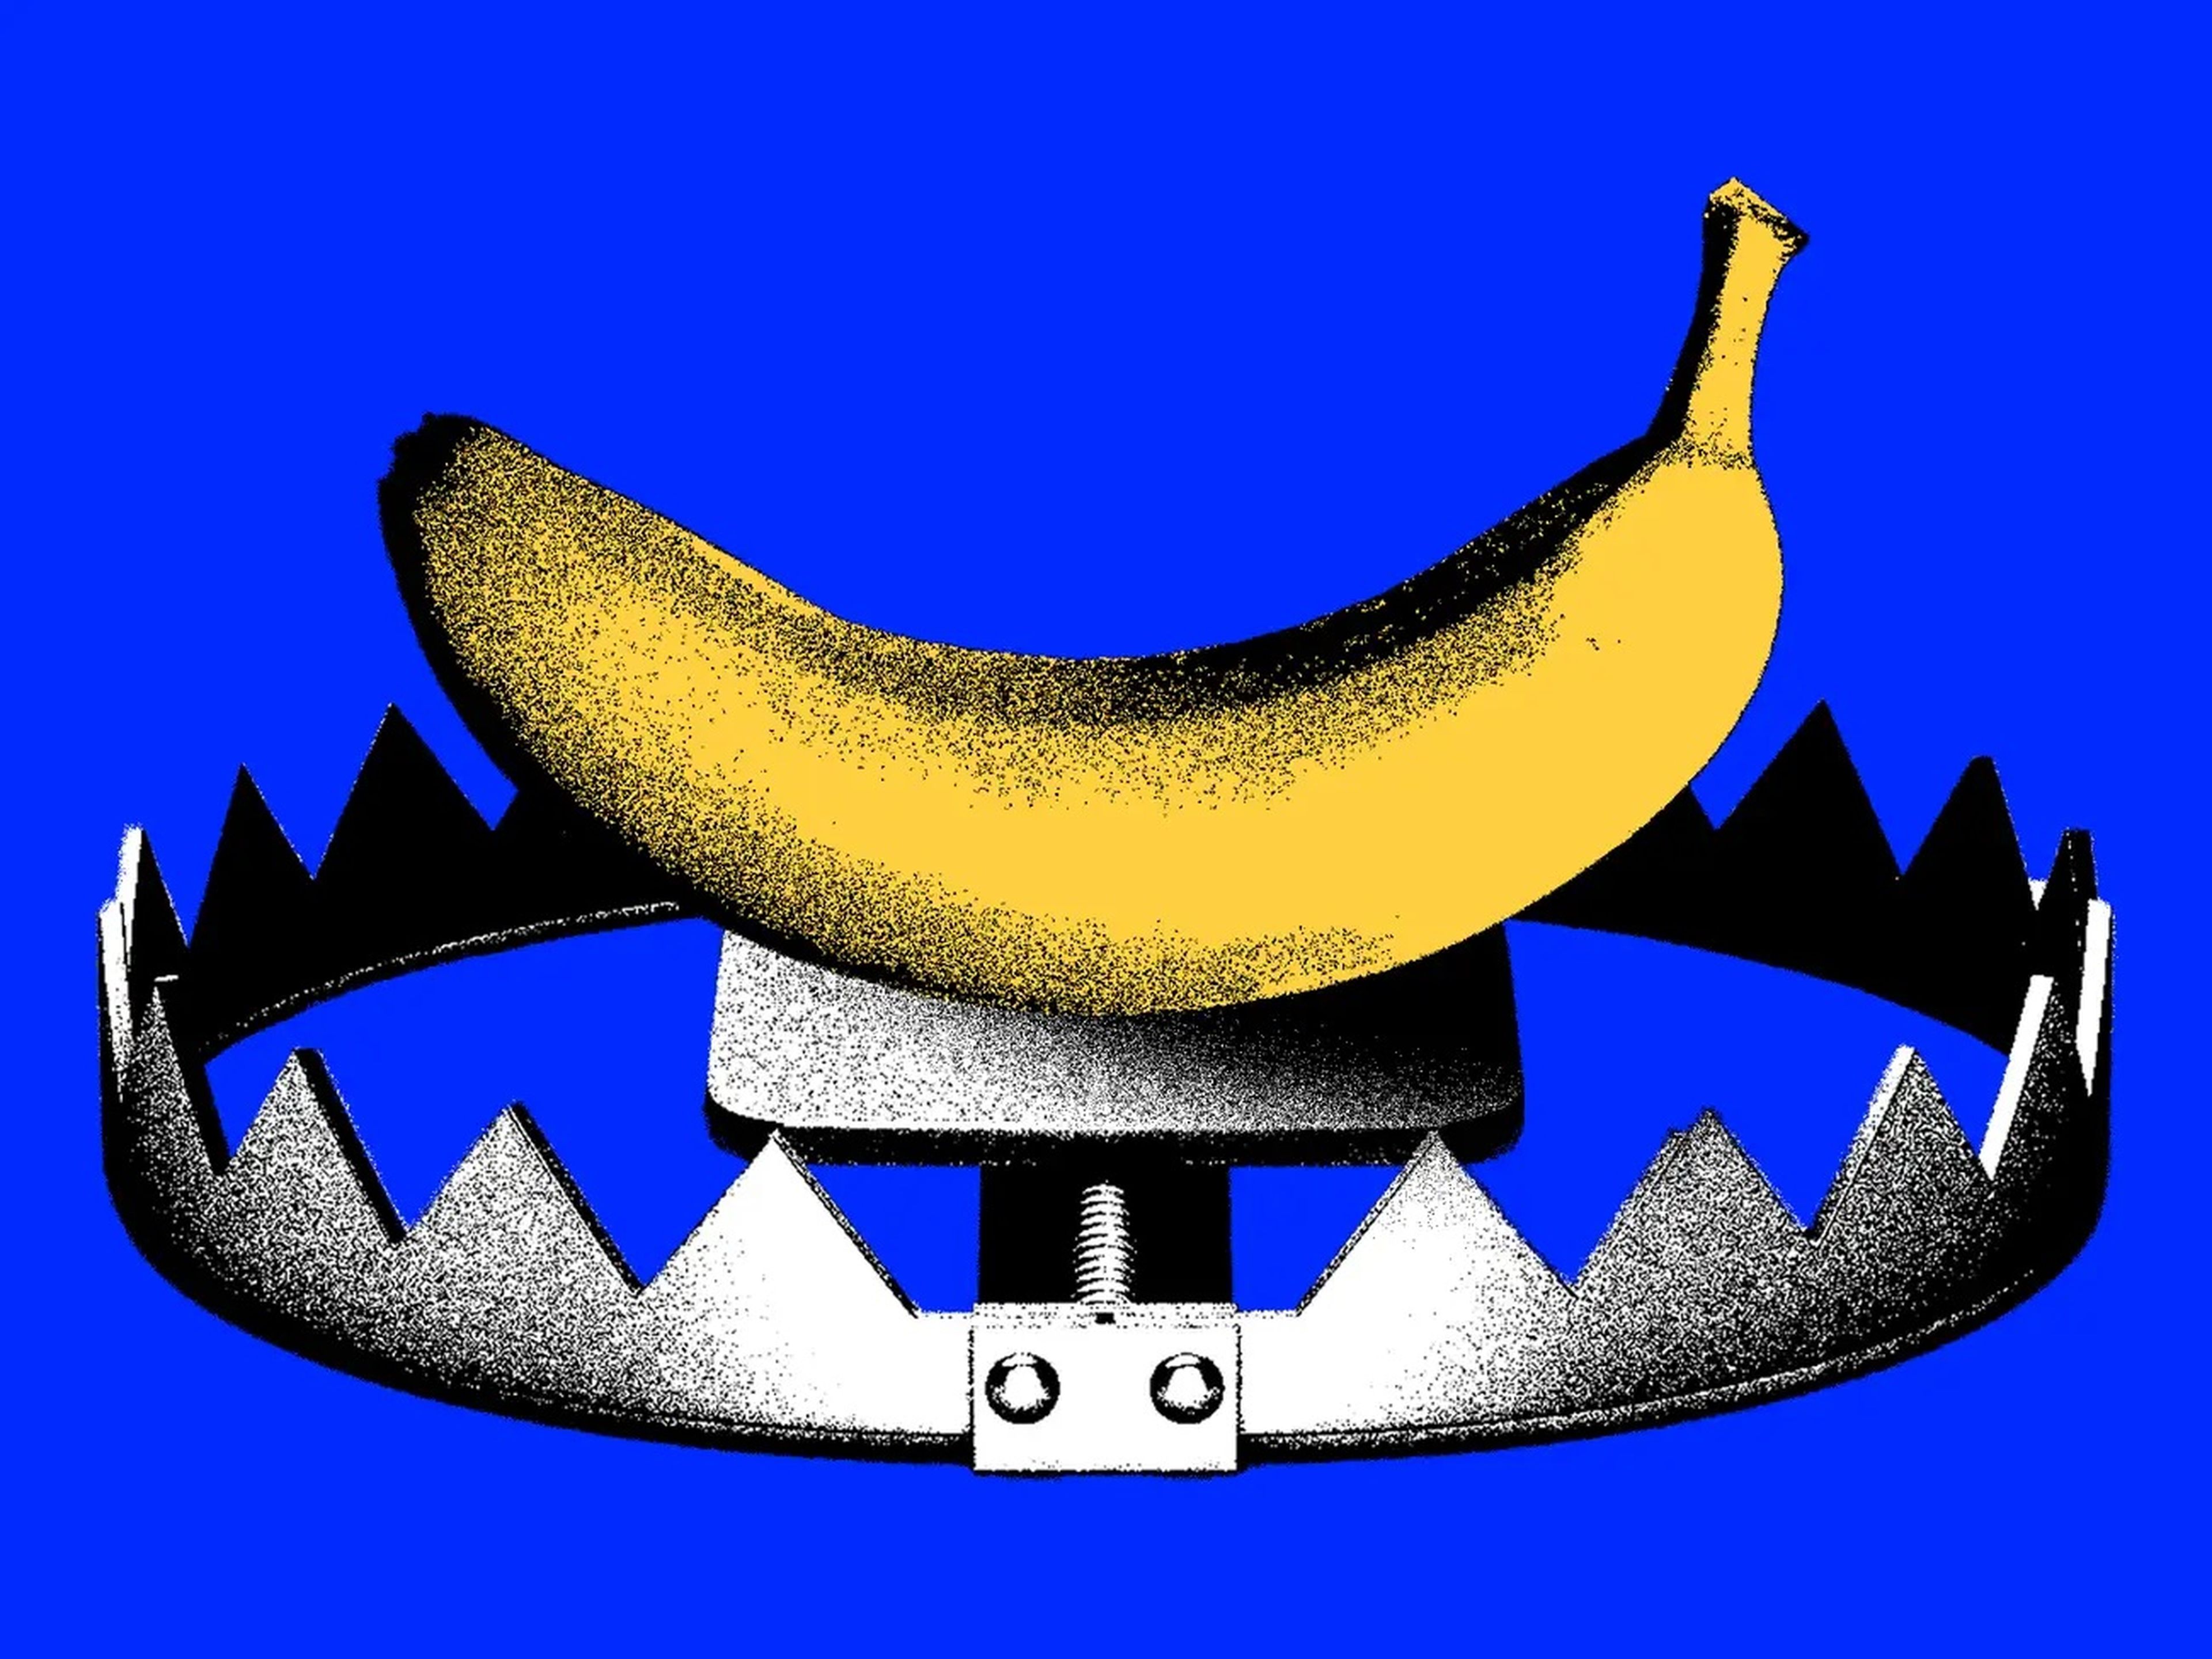 banana, plátano, trampa, cepo